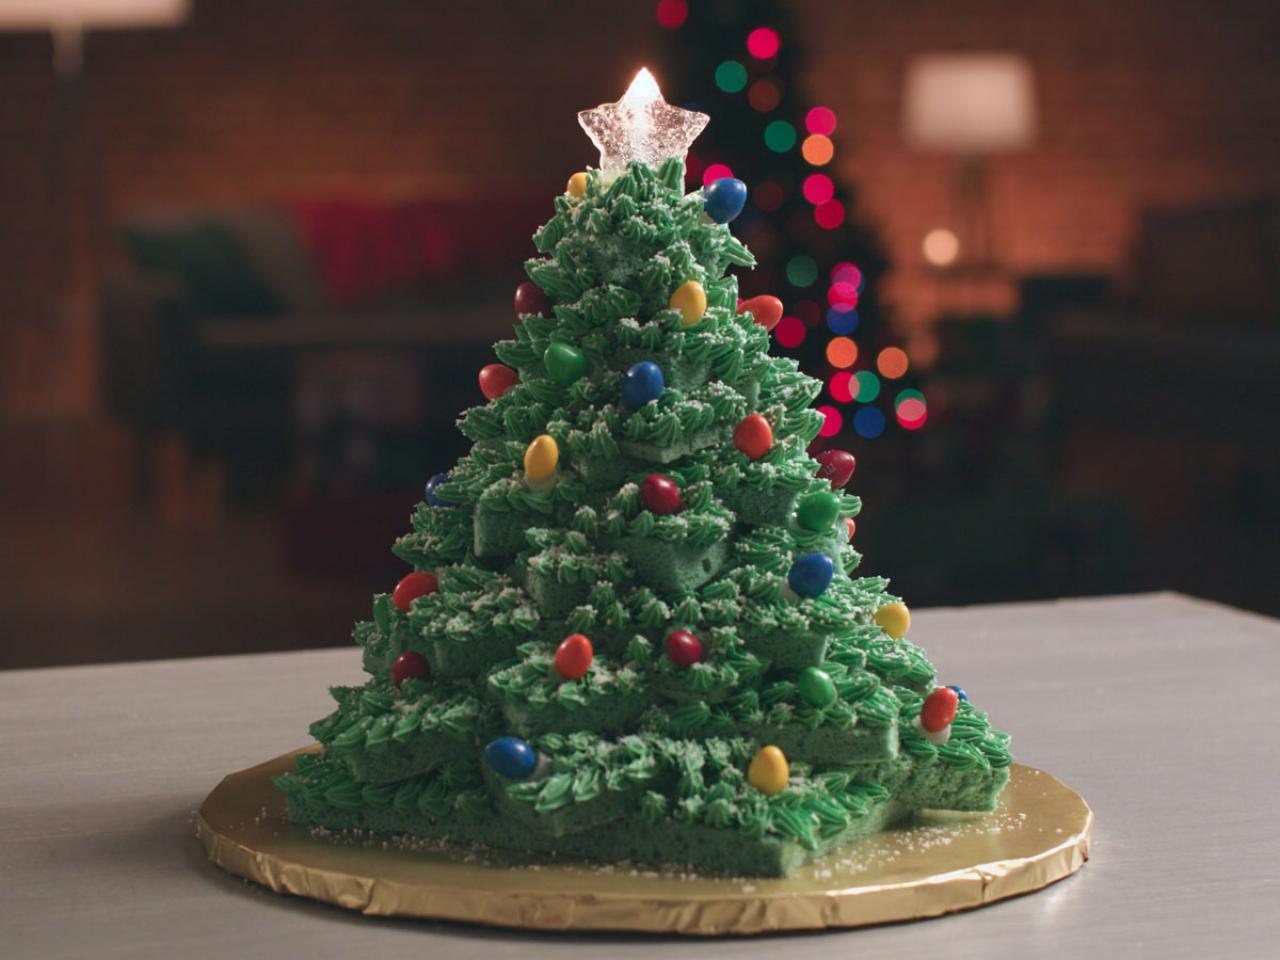 https://food.fnr.sndimg.com/content/dam/images/food/fullset/2018/10/5/0/5227911_FN_Holiday-2018_Christmas-Tree-Cake-_4X3.jpg.rend.hgtvcom.1280.960.suffix/1538777241478.jpeg